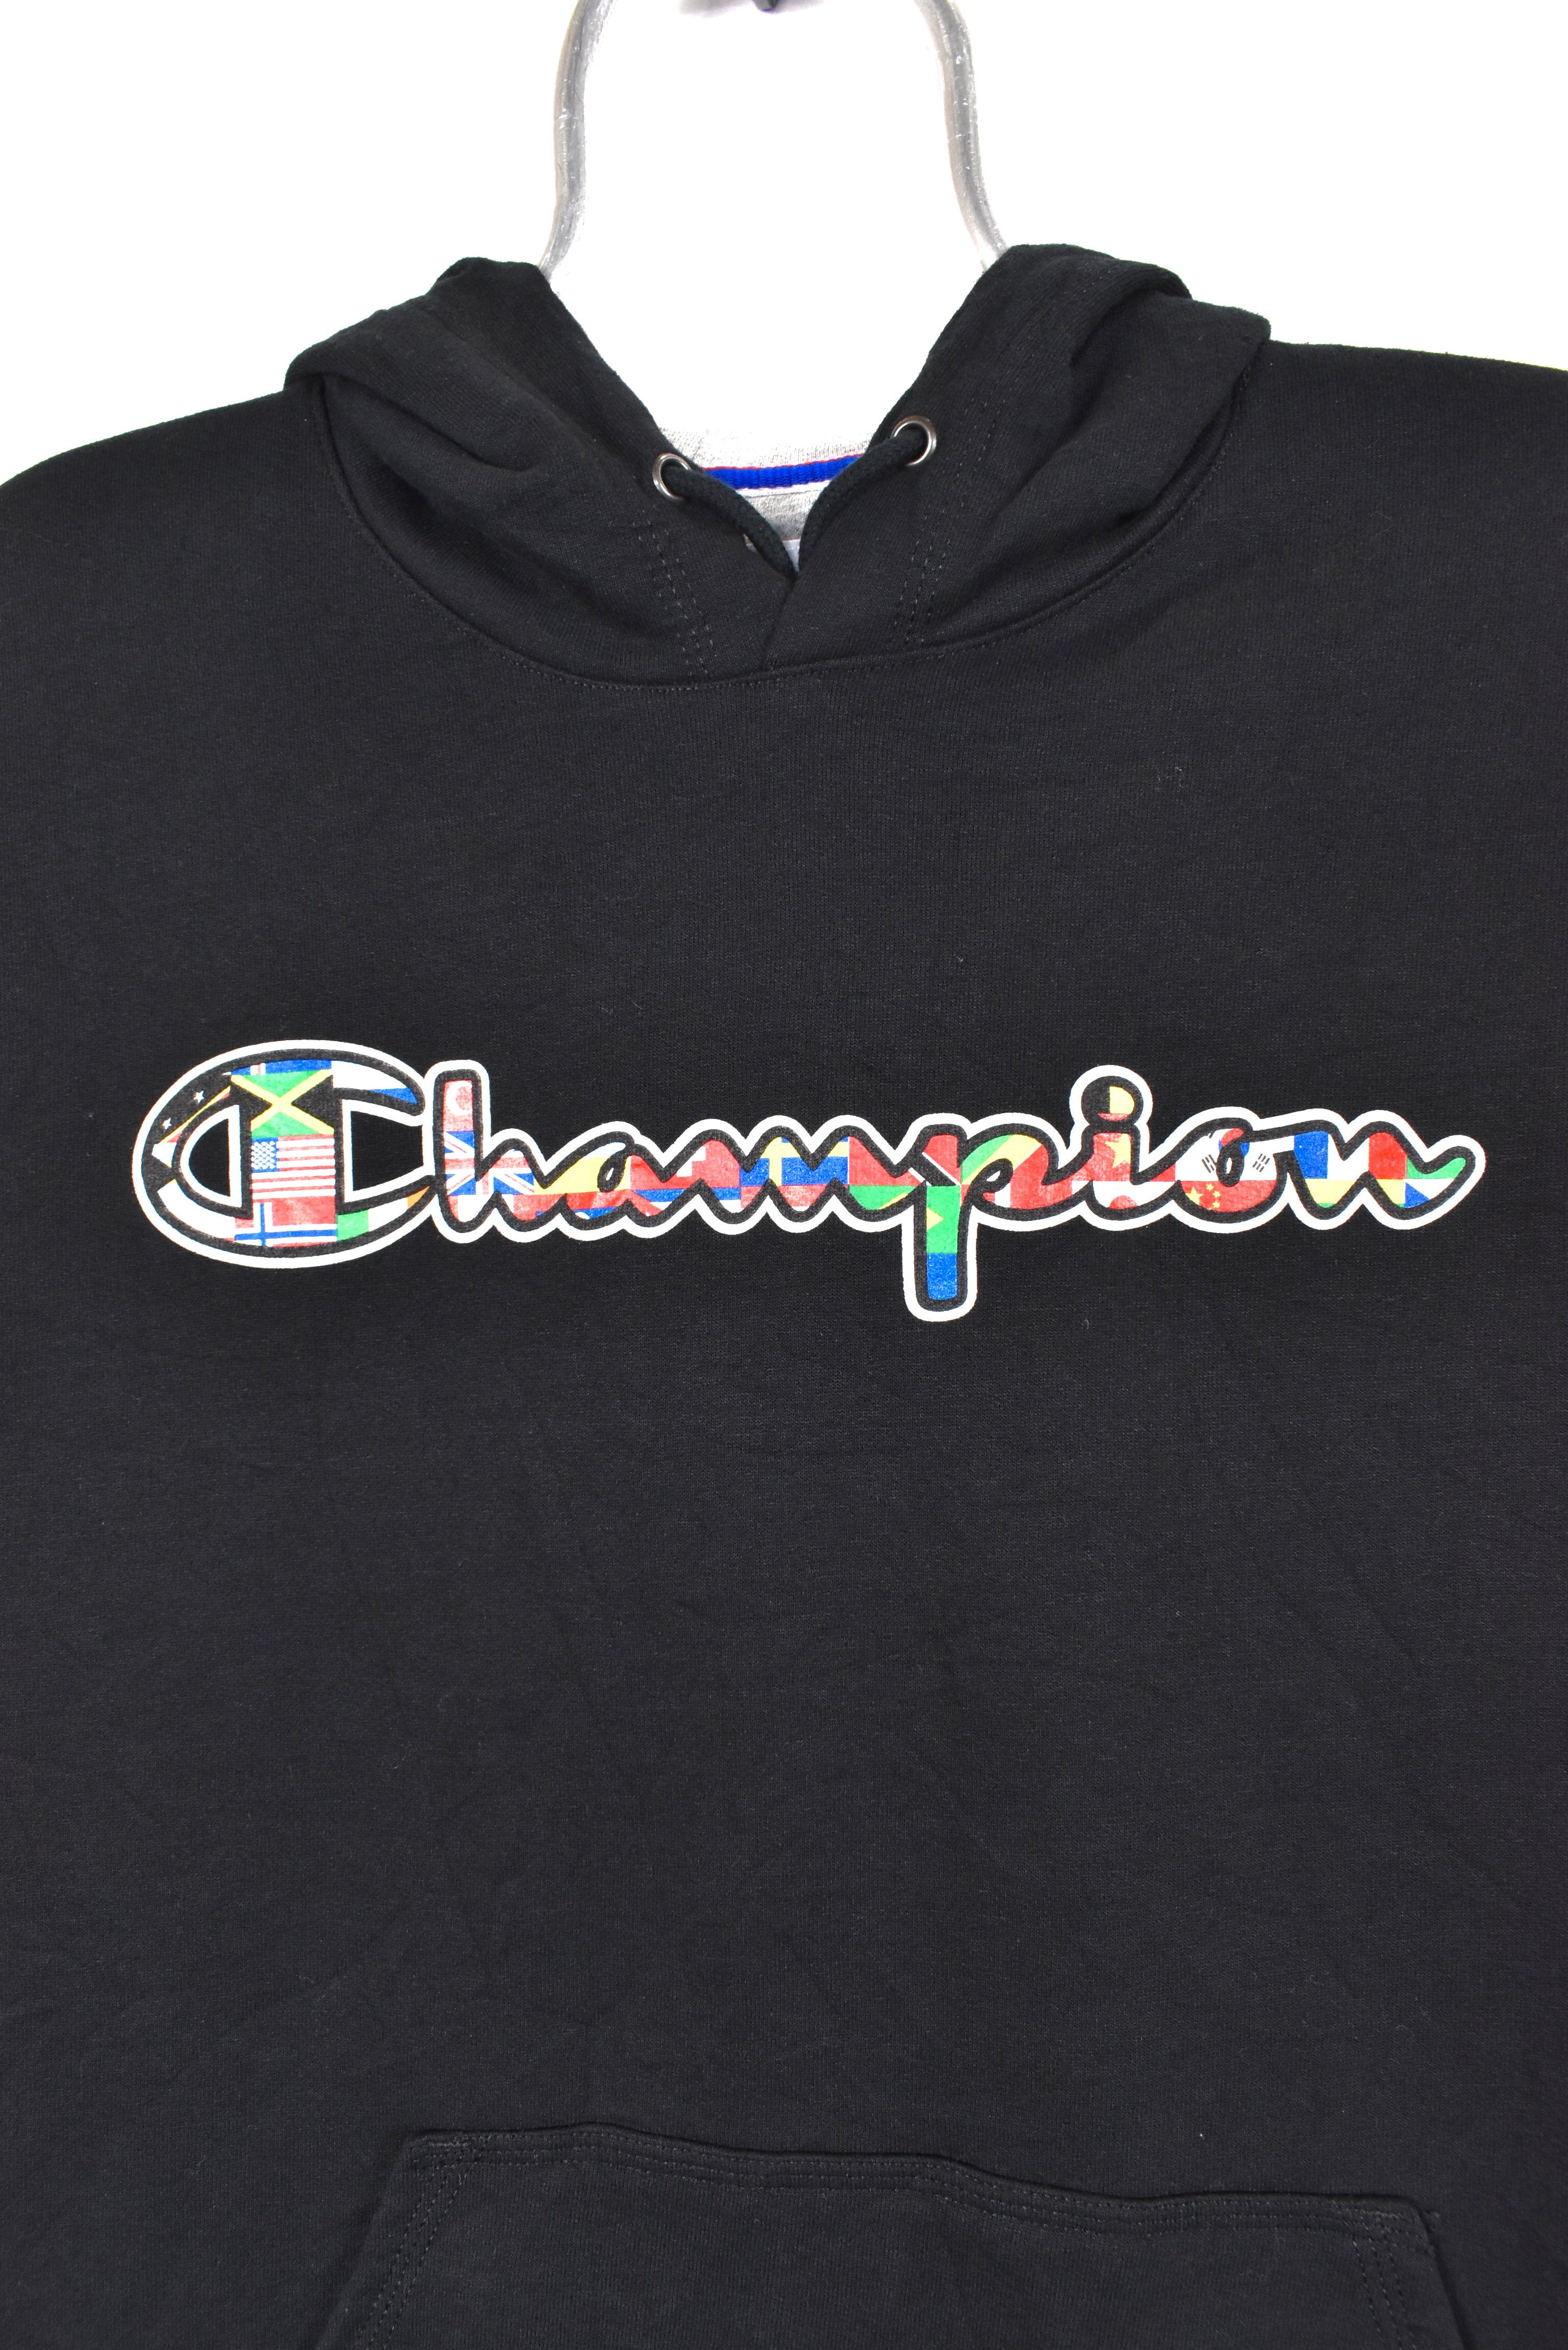 Modern Champion hoodie, black graphic sweatshirt - AU Small CHAMPION